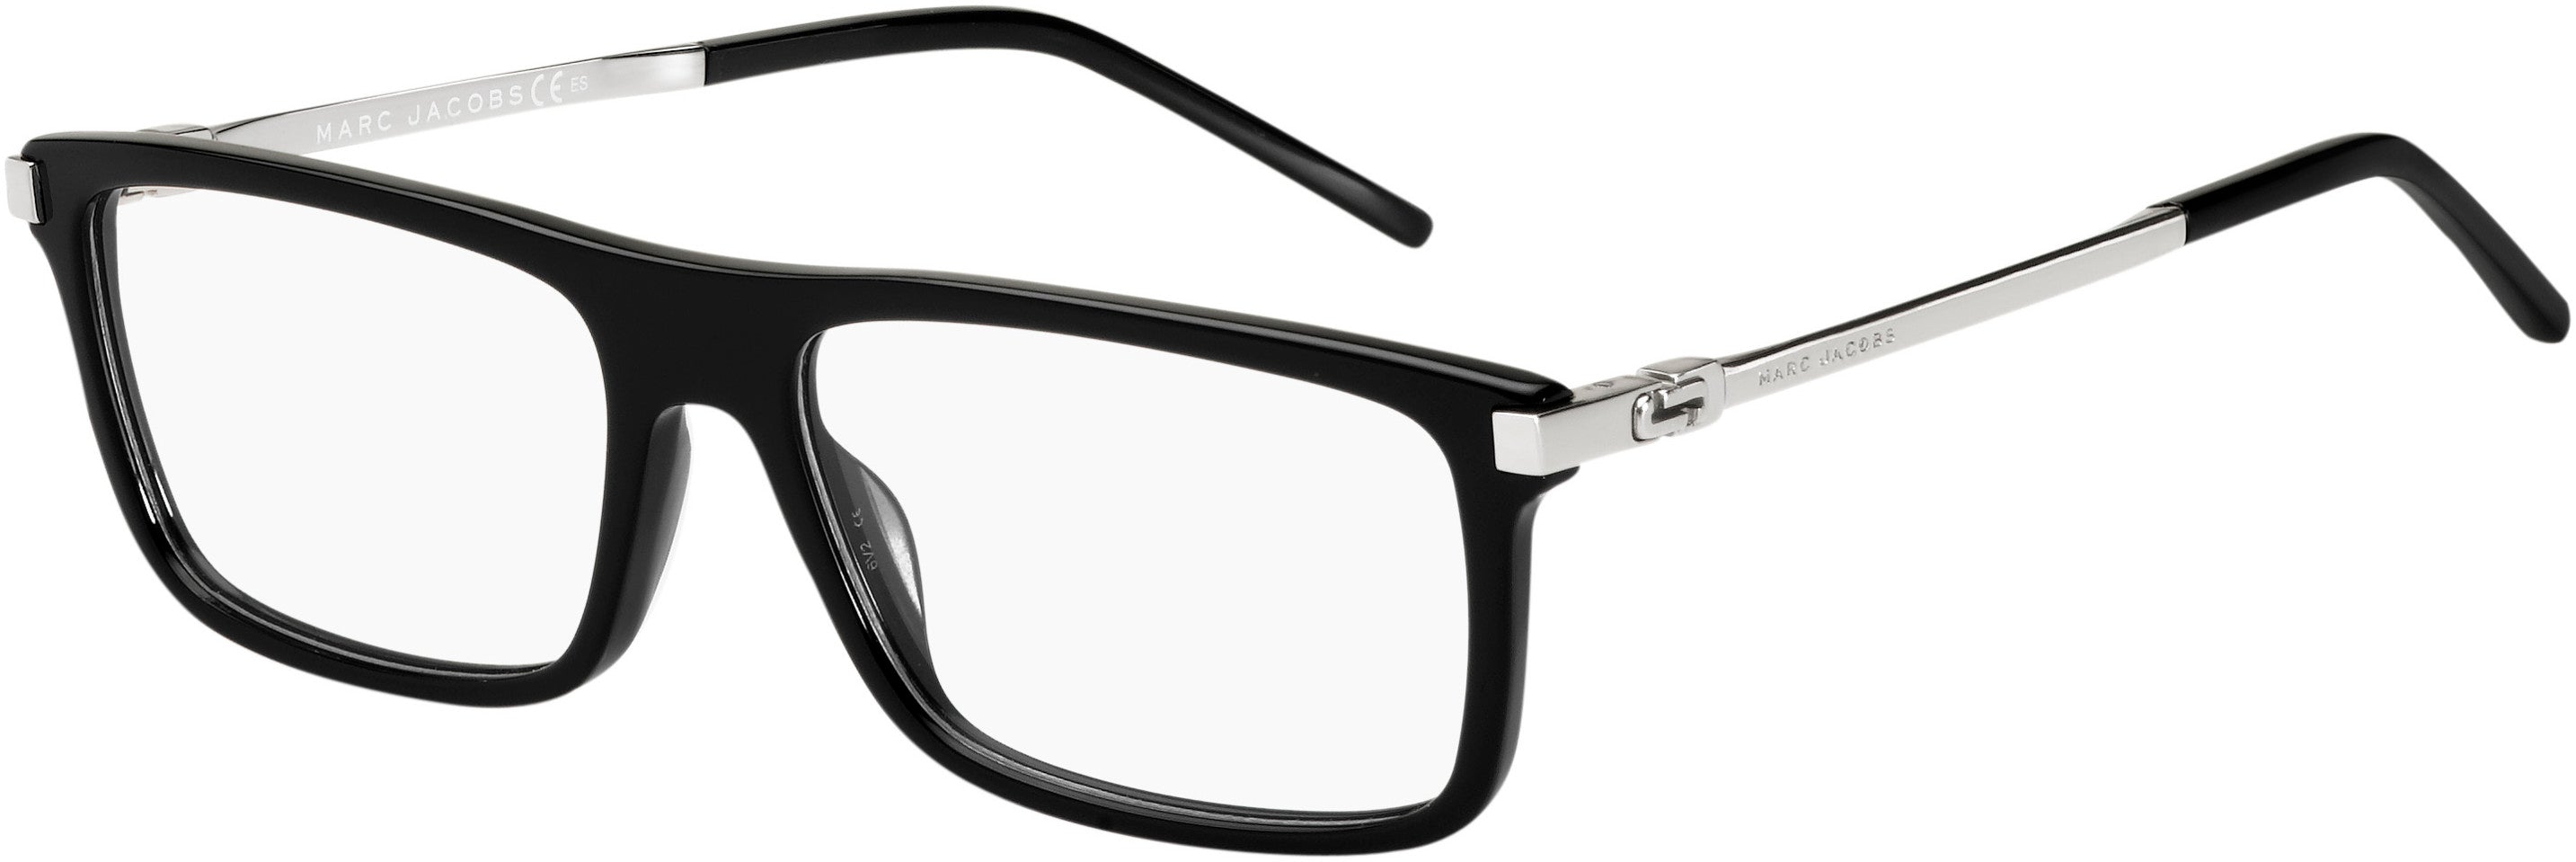 Marc Jacobs Marc 142 Rectangular Eyeglasses 0CSA-0CSA  Black (00 Demo Lens)